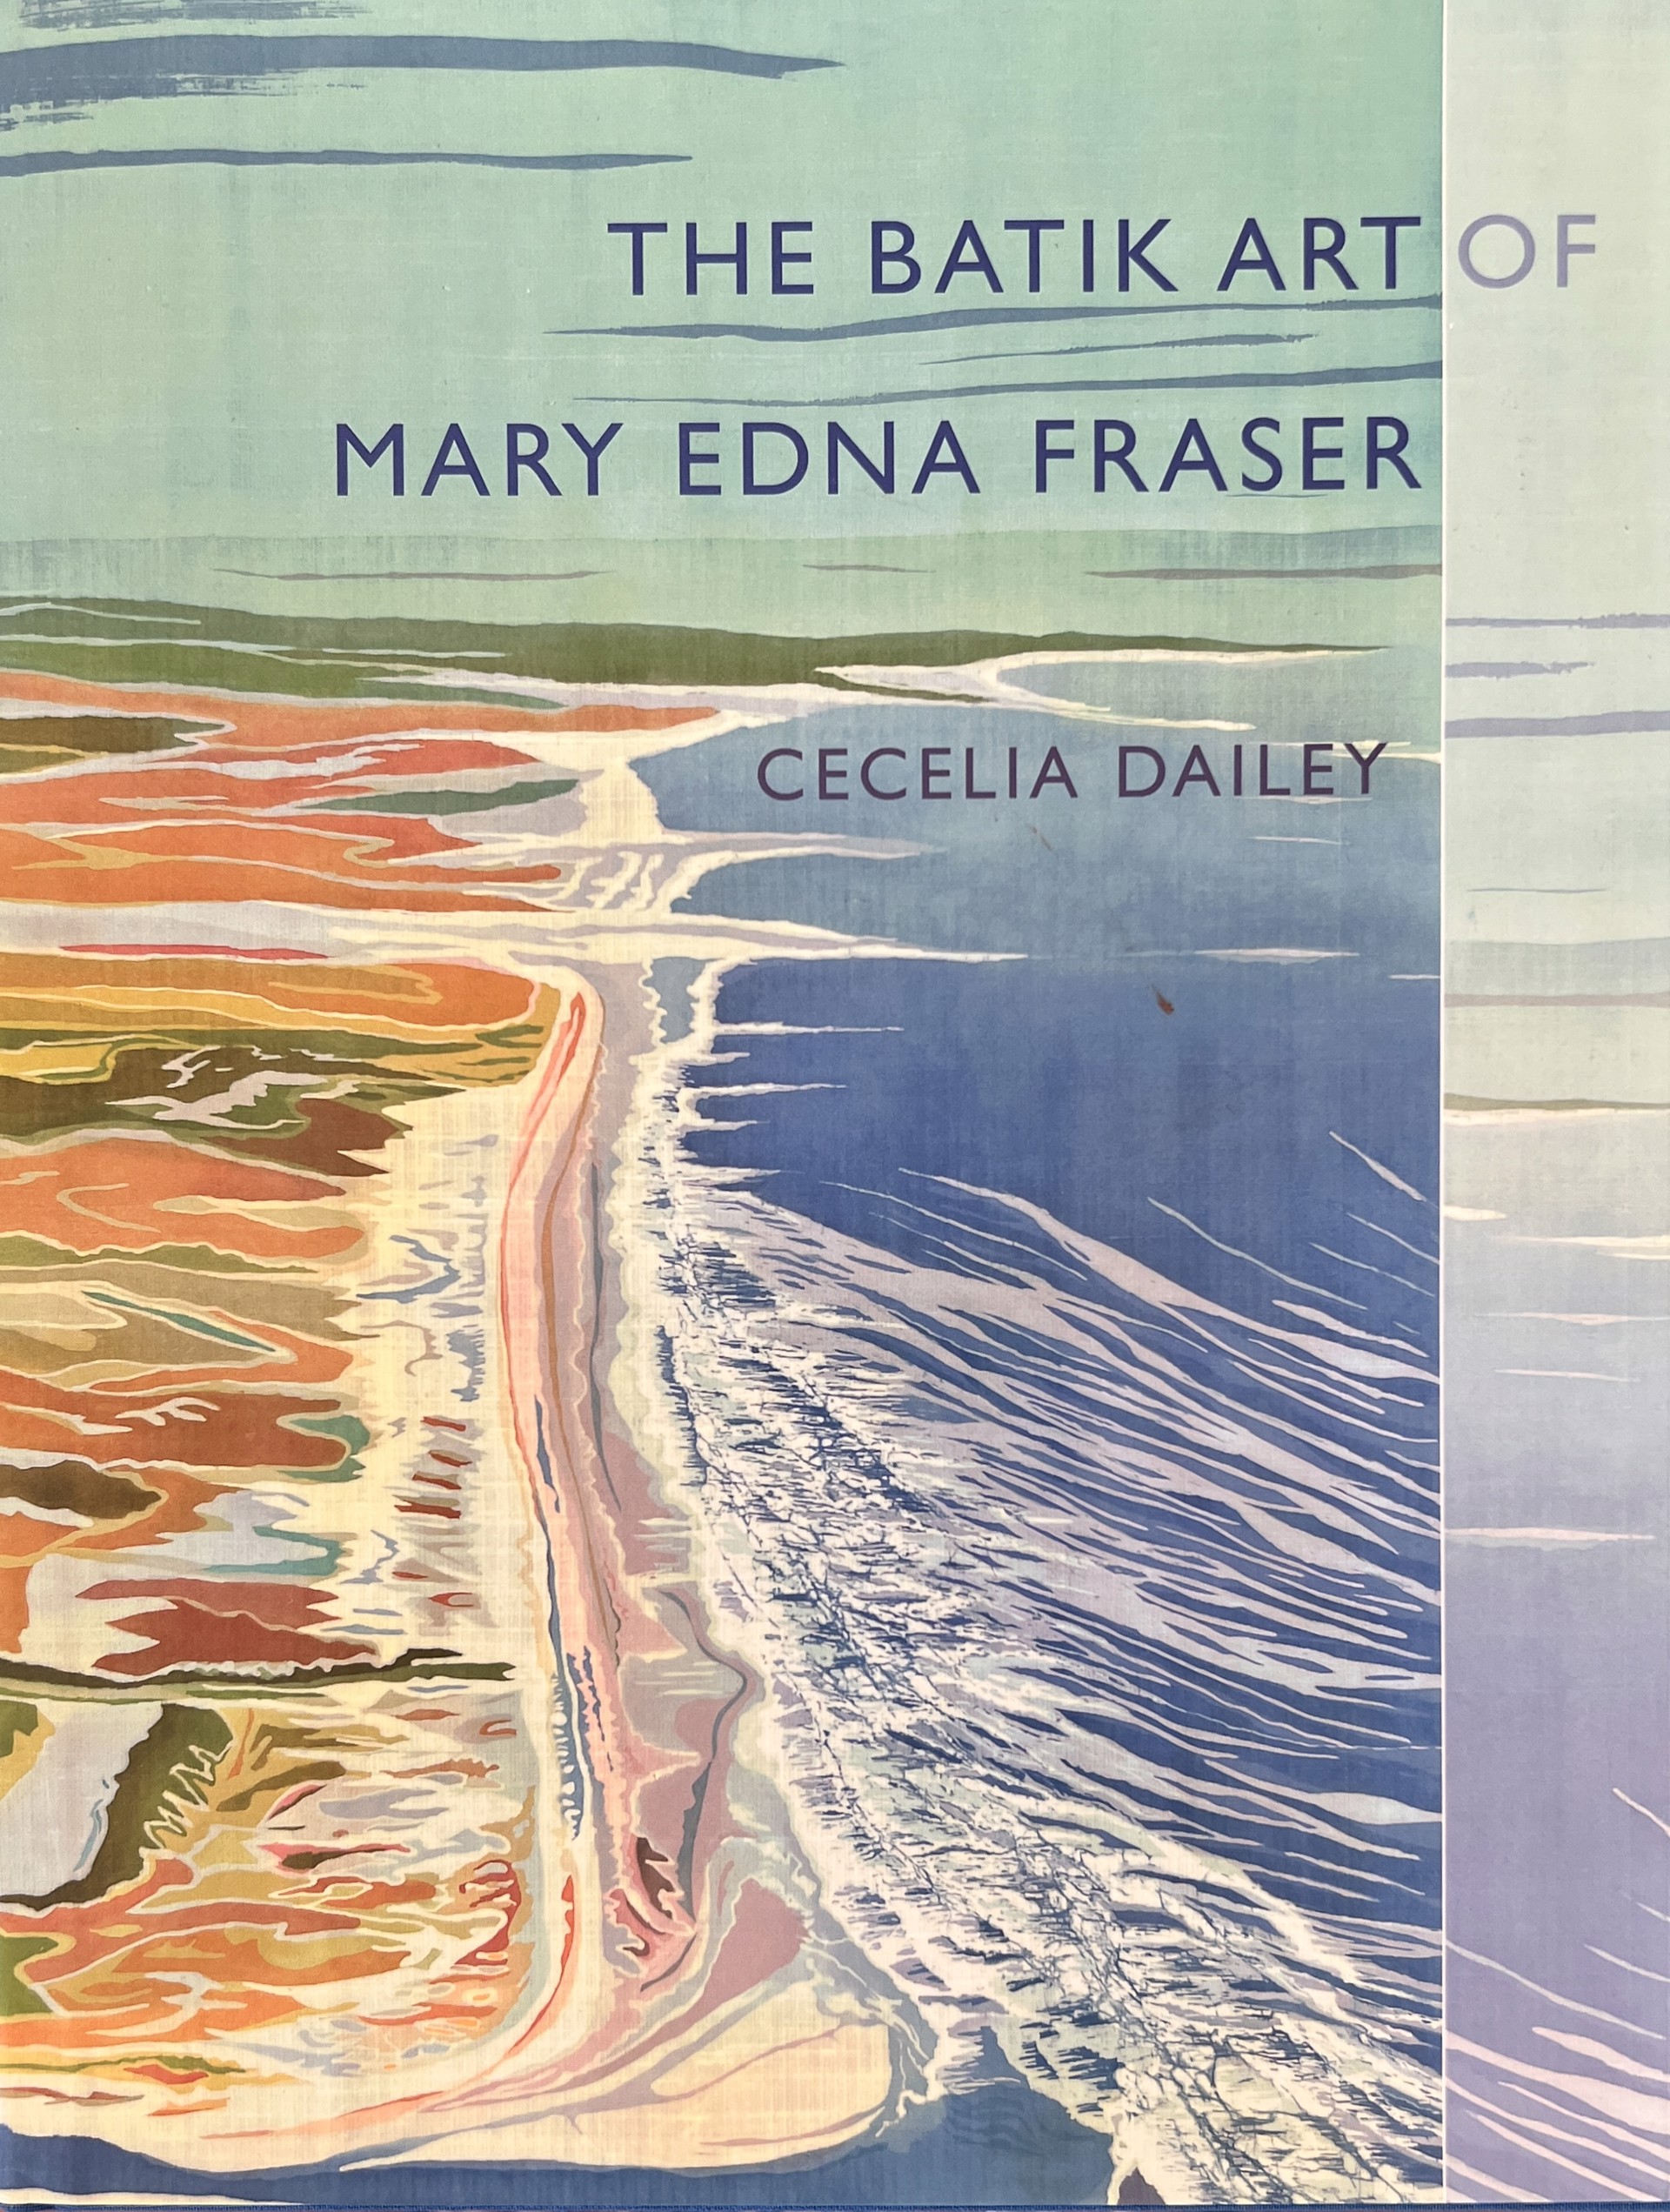 The Batik Art of Mary Edna Fraser by Cecelia Dailey - Book by Mary Edna Fraser